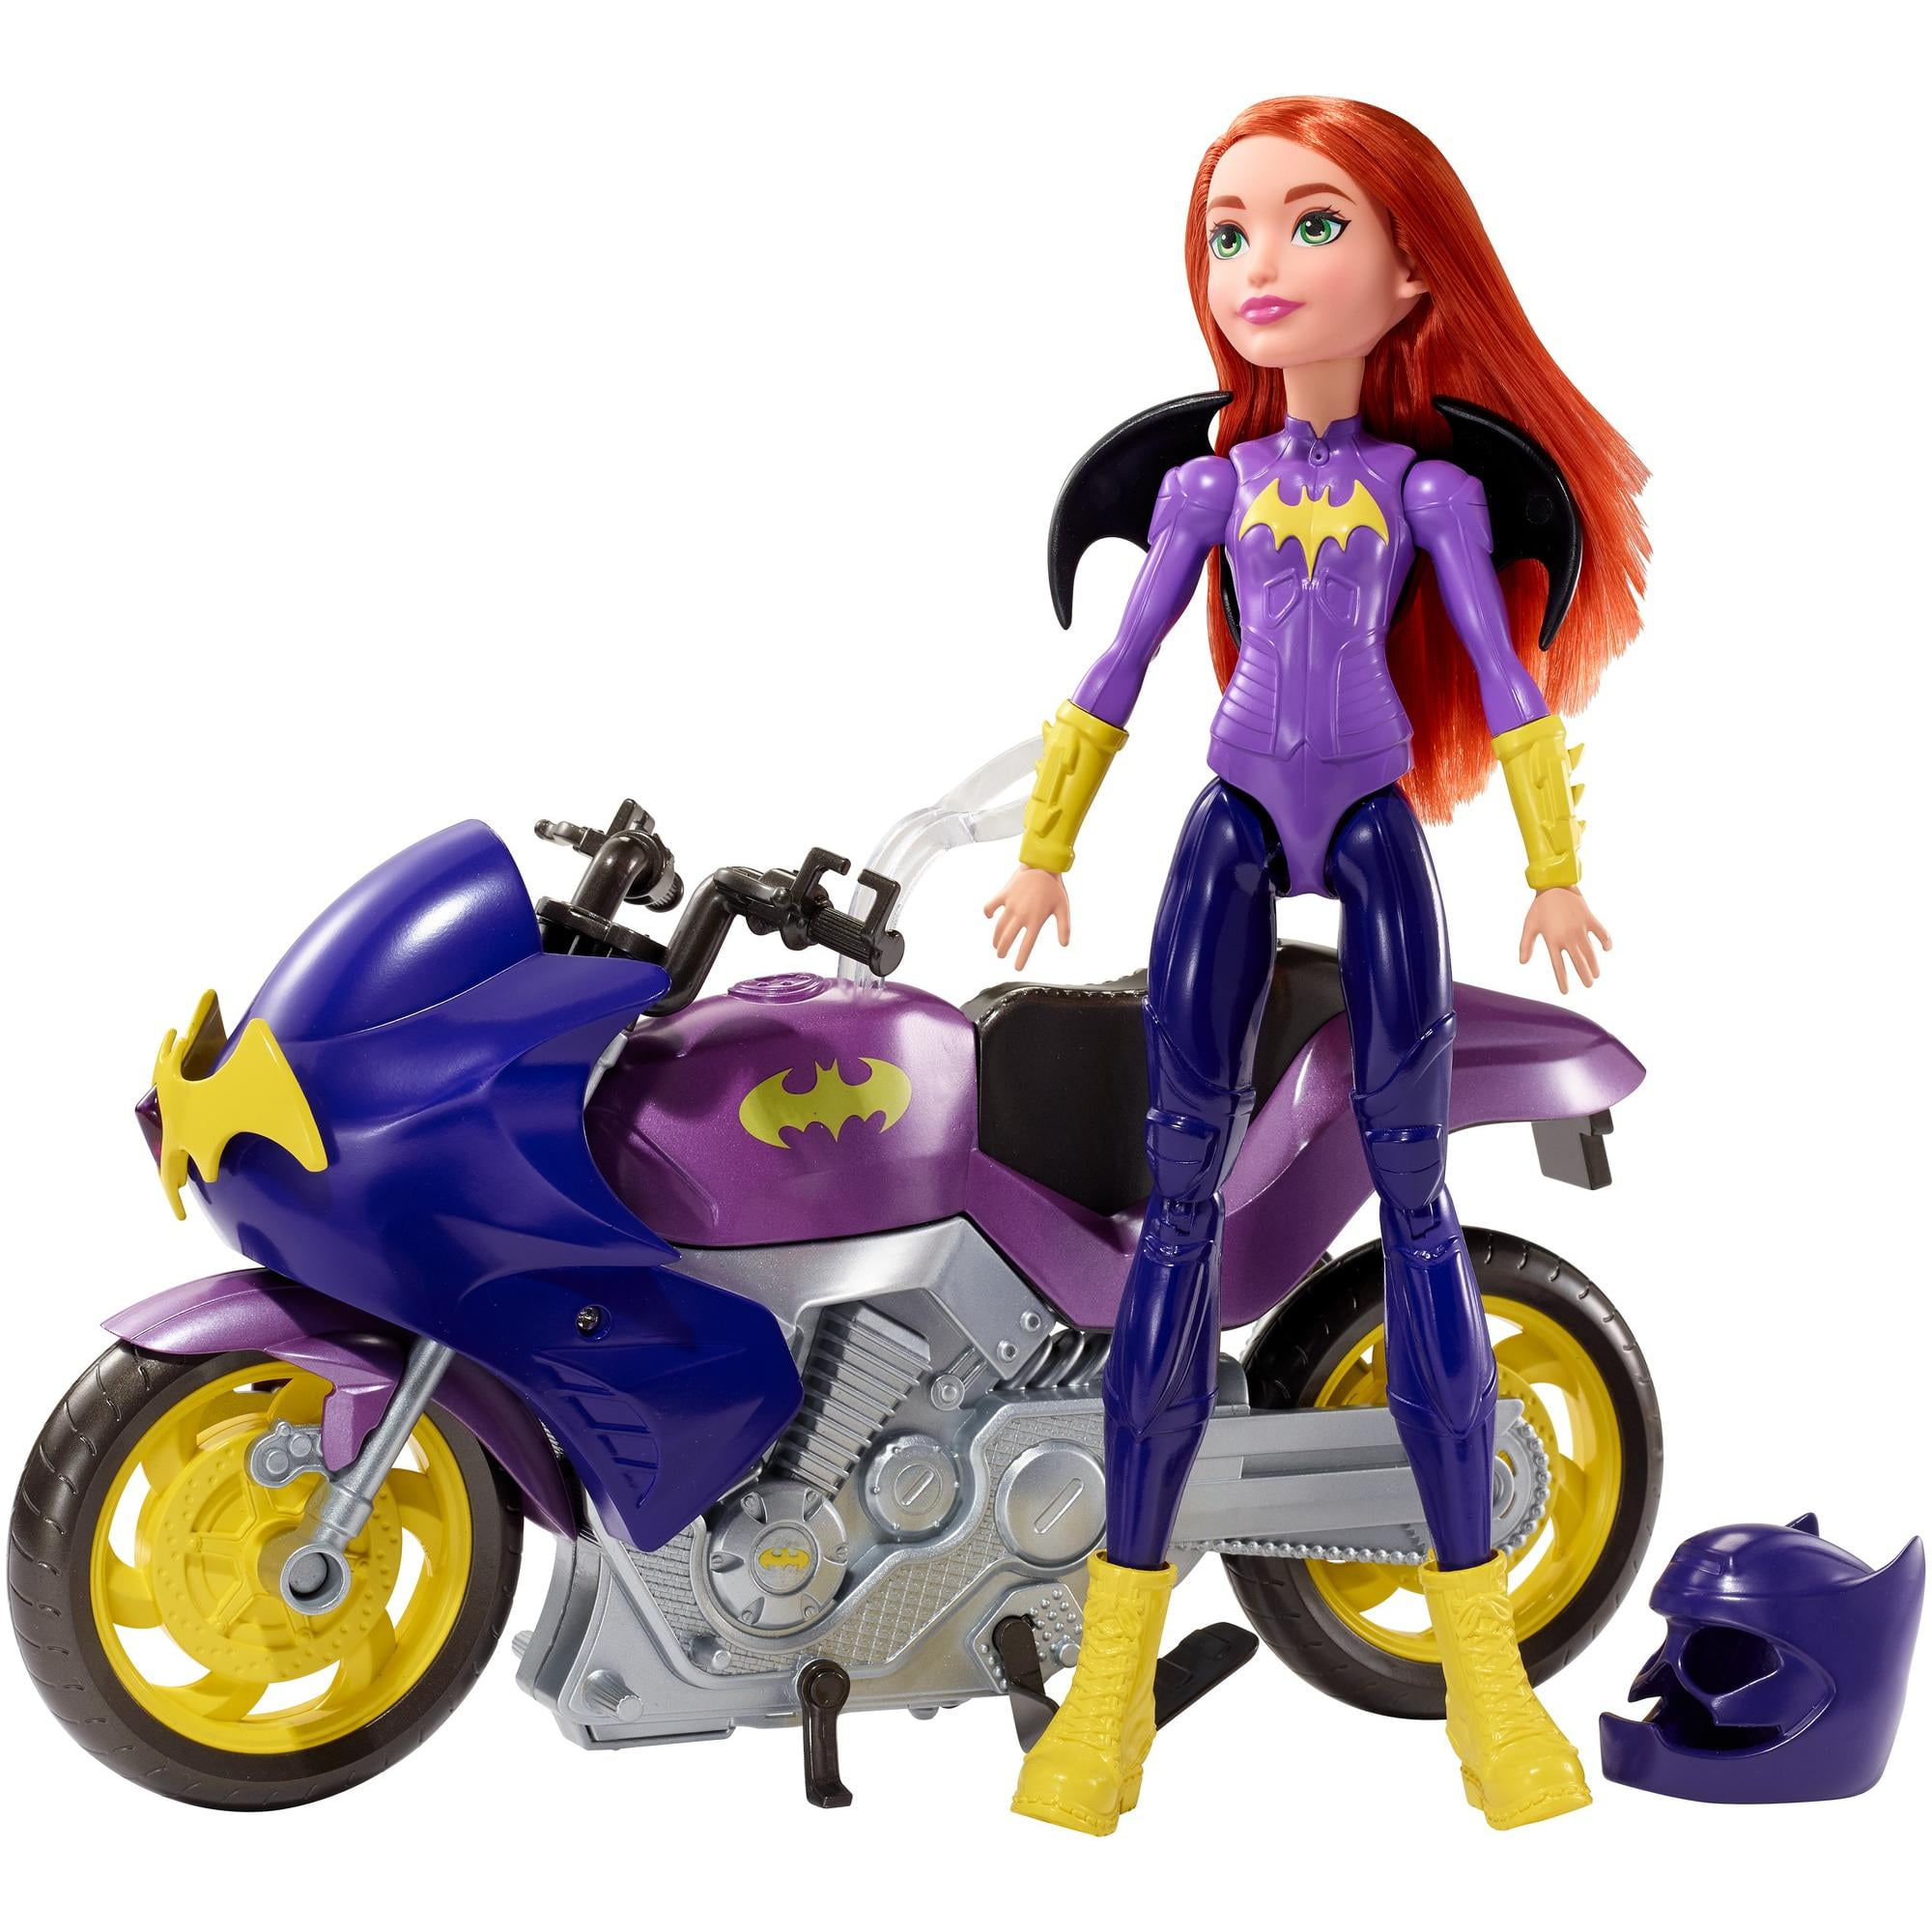 DC Super Hero Girls Batgirl & Vehicle Playset 